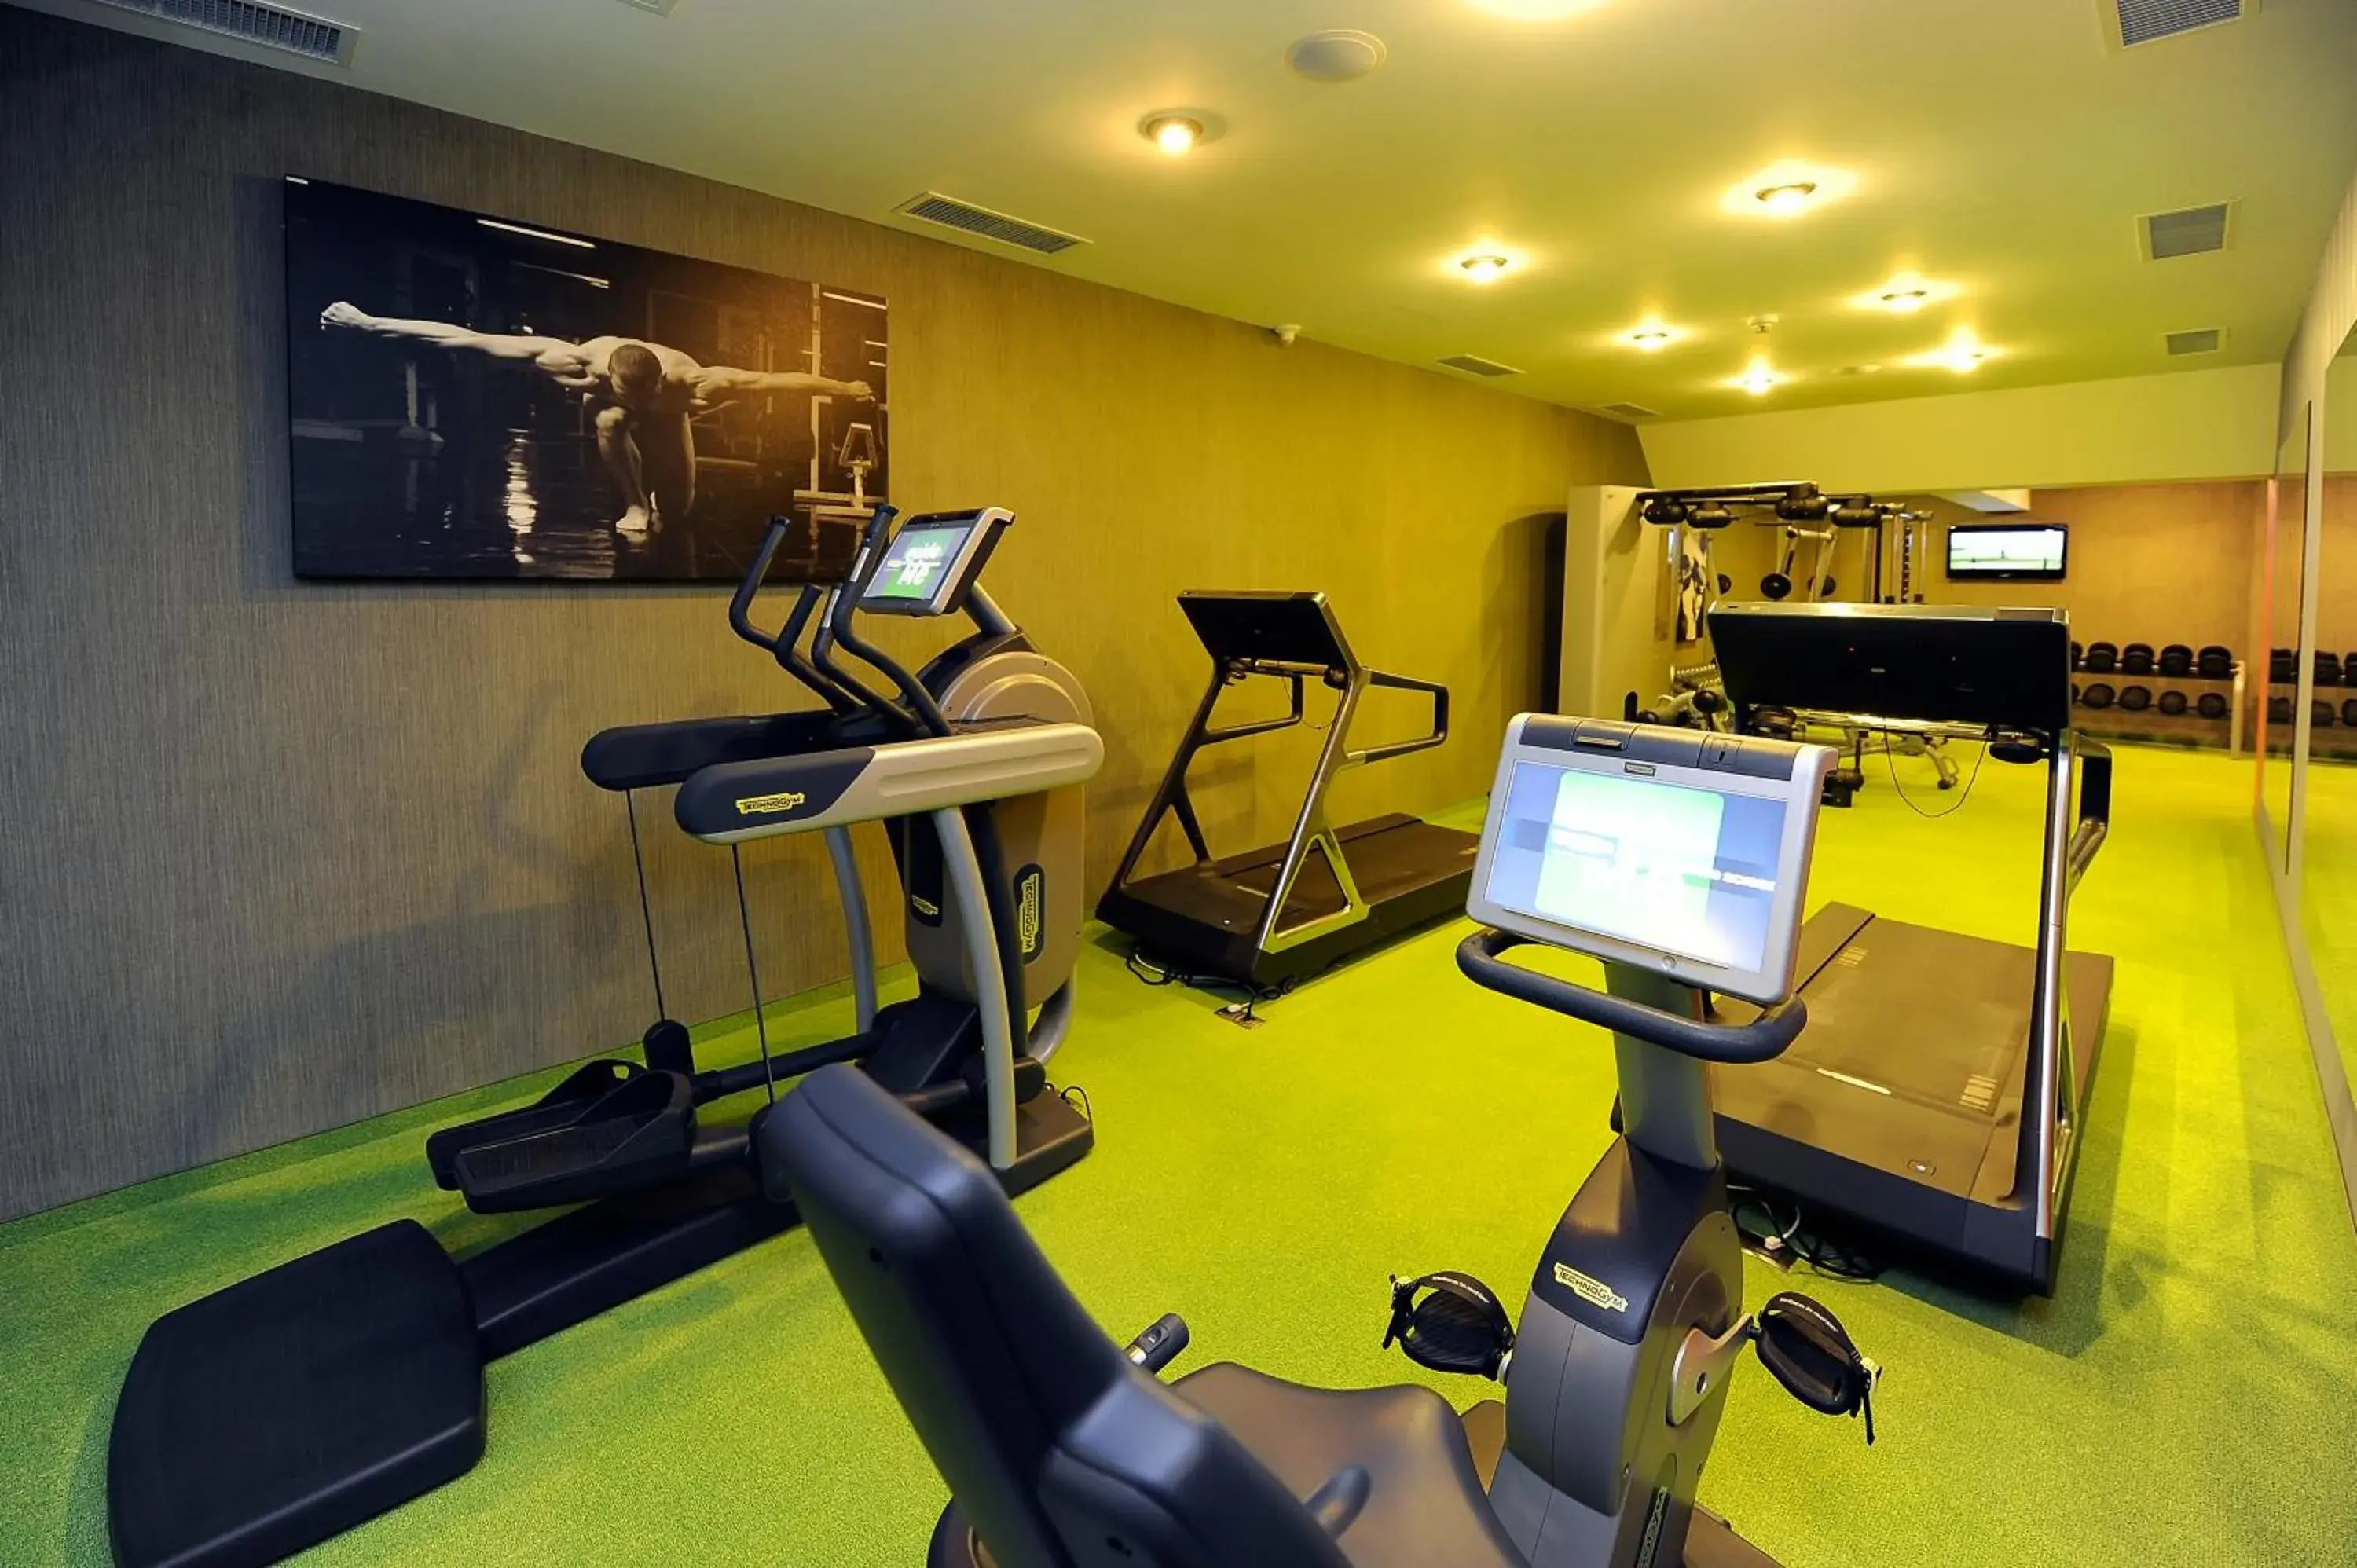 Fitness centre/facilities, Fitness Center/Facilities in Plaza V Hotel